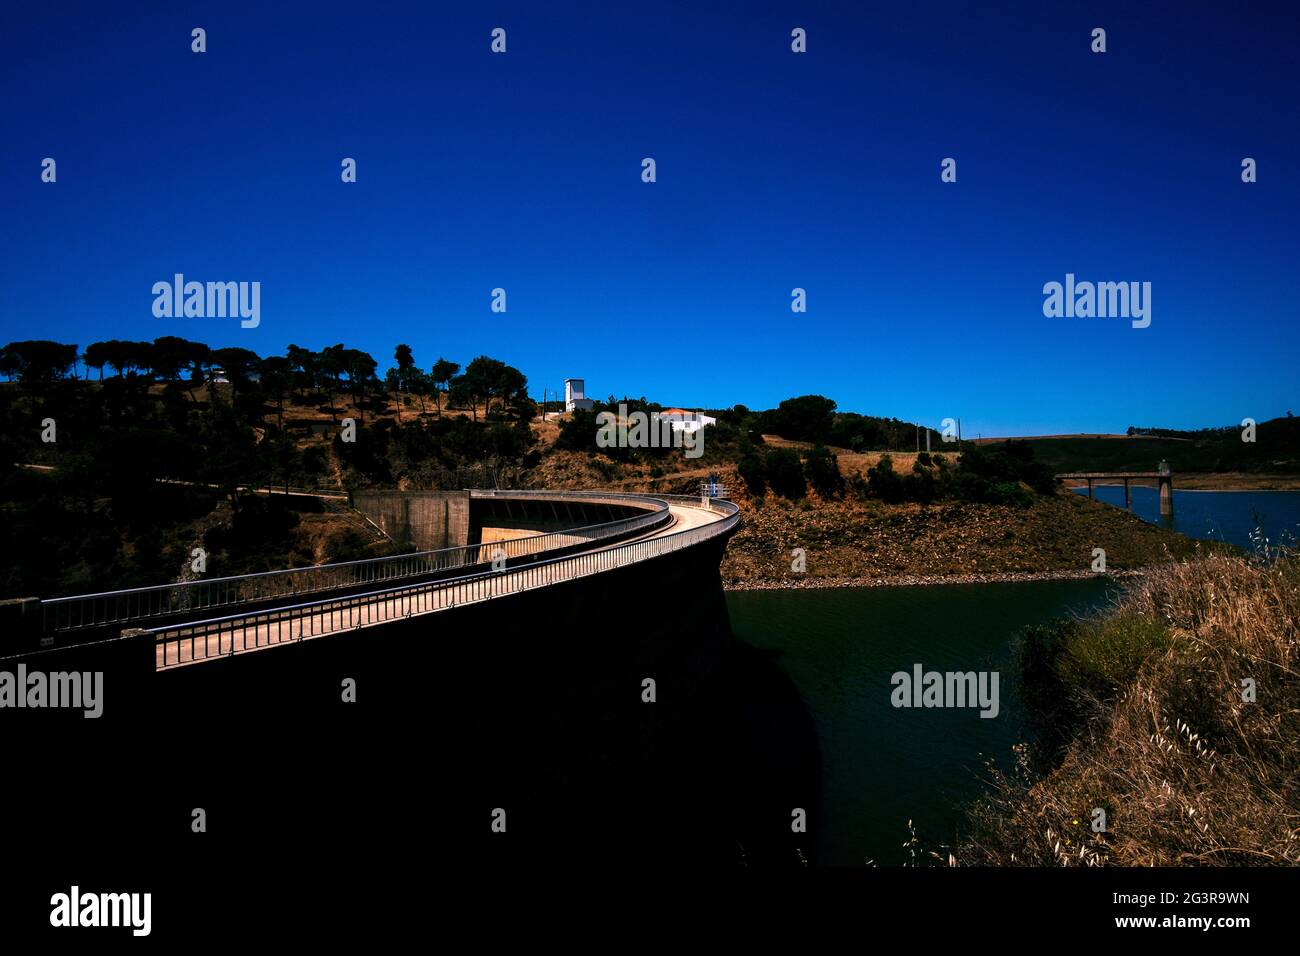 A view of the dam at Barragem da bravura in The Algarve, Portugal Stock Photo